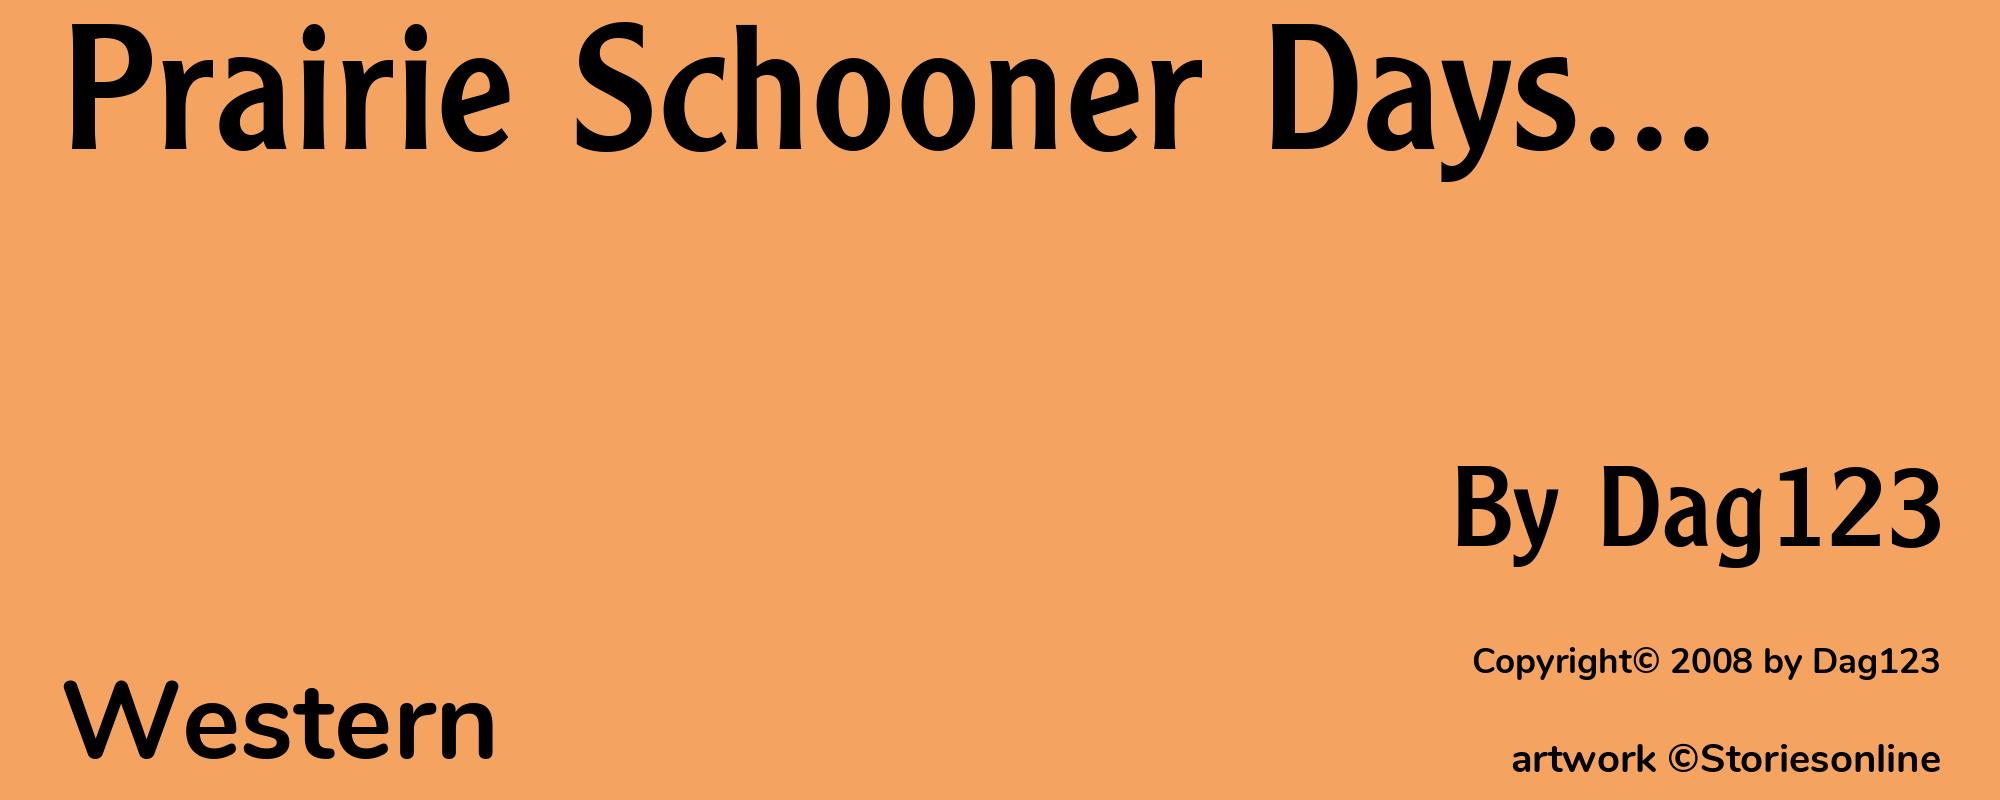 Prairie Schooner Days... - Cover